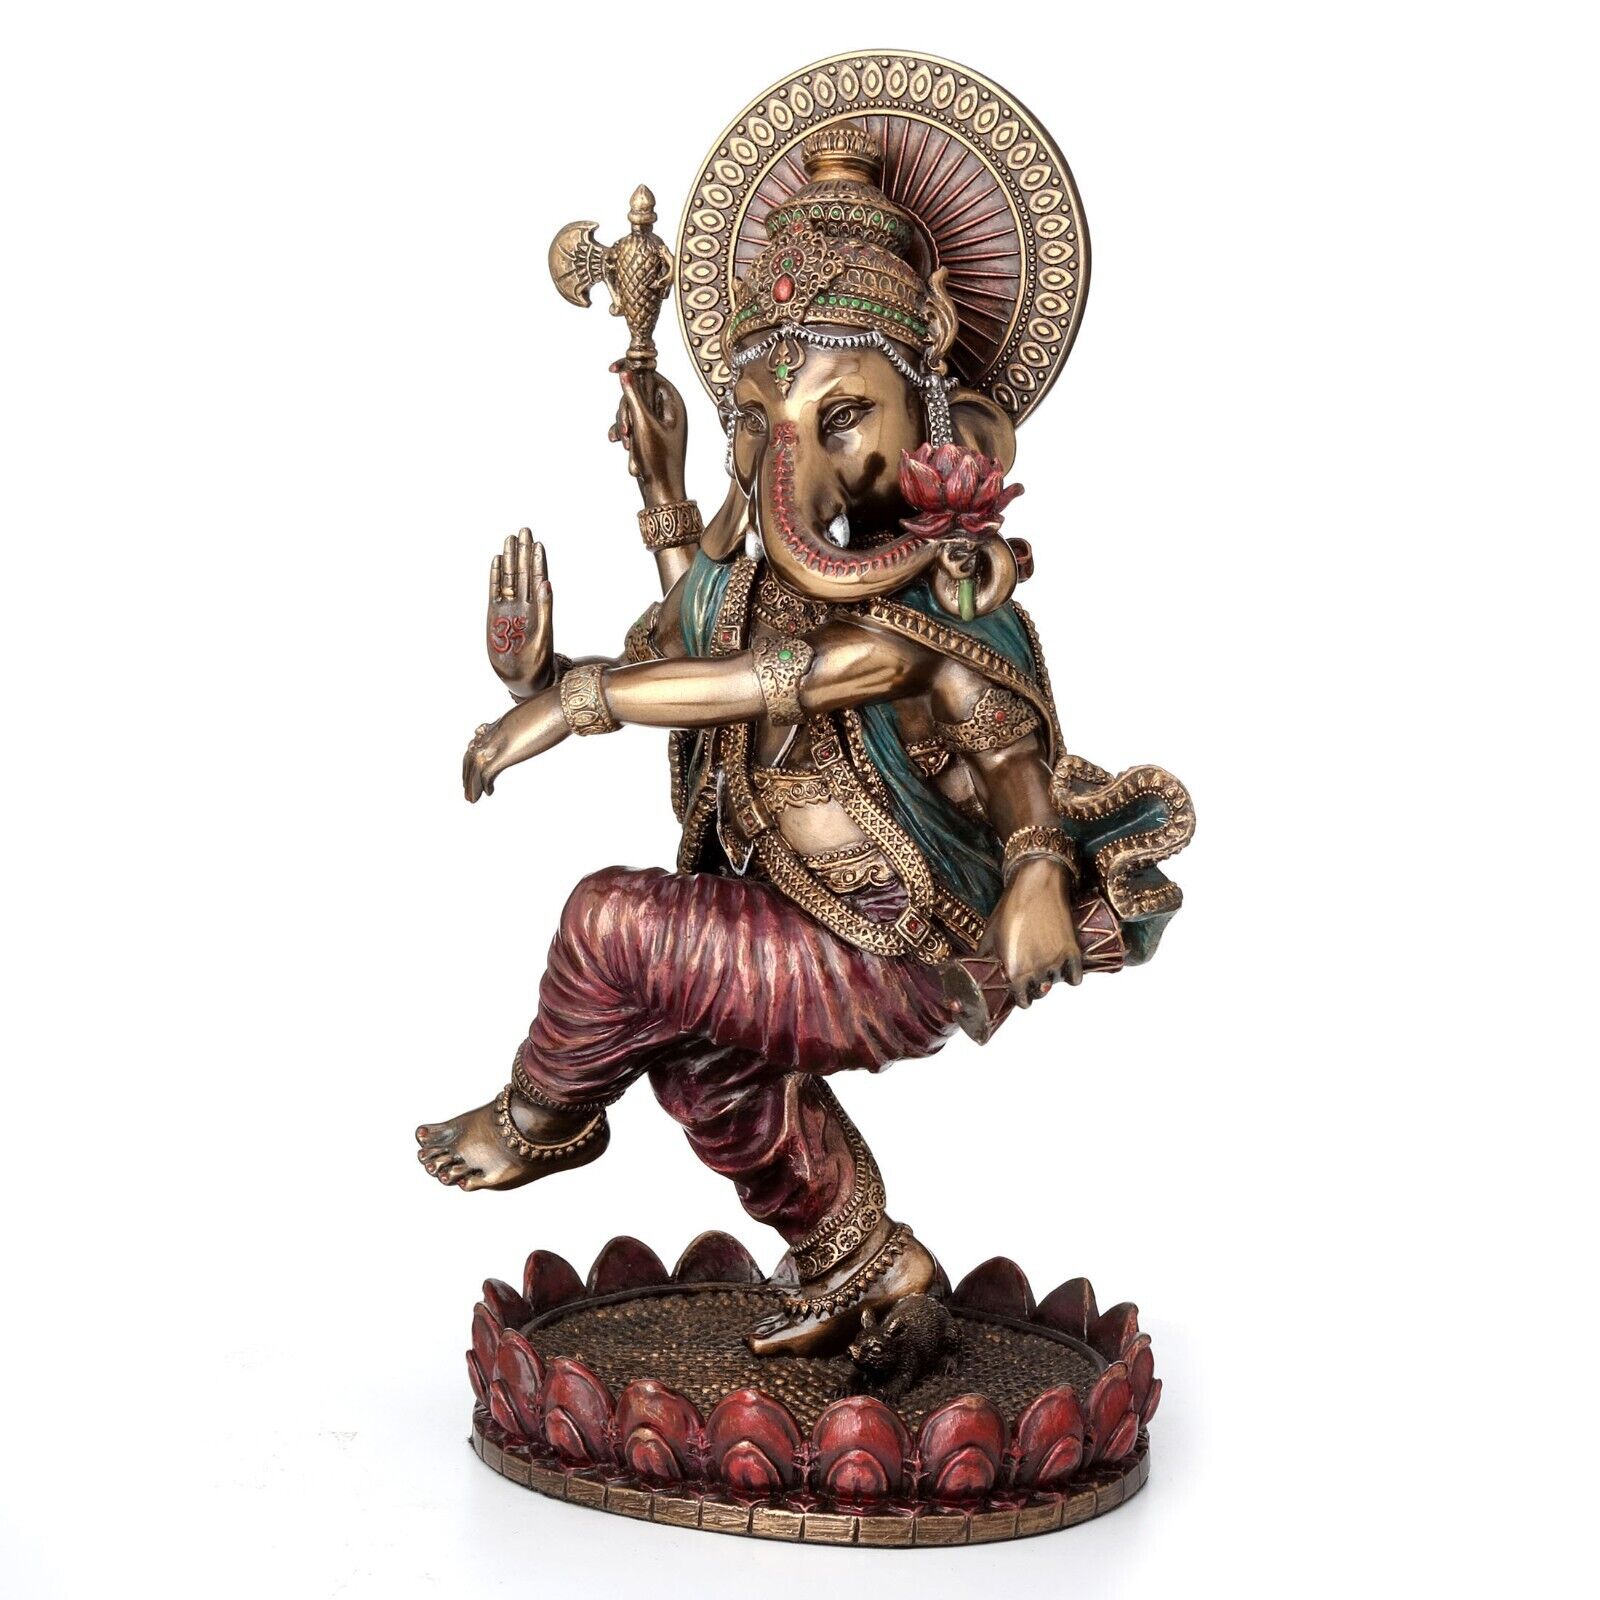 Dancing Ganesha Statue Hindu Elephant God Figurine